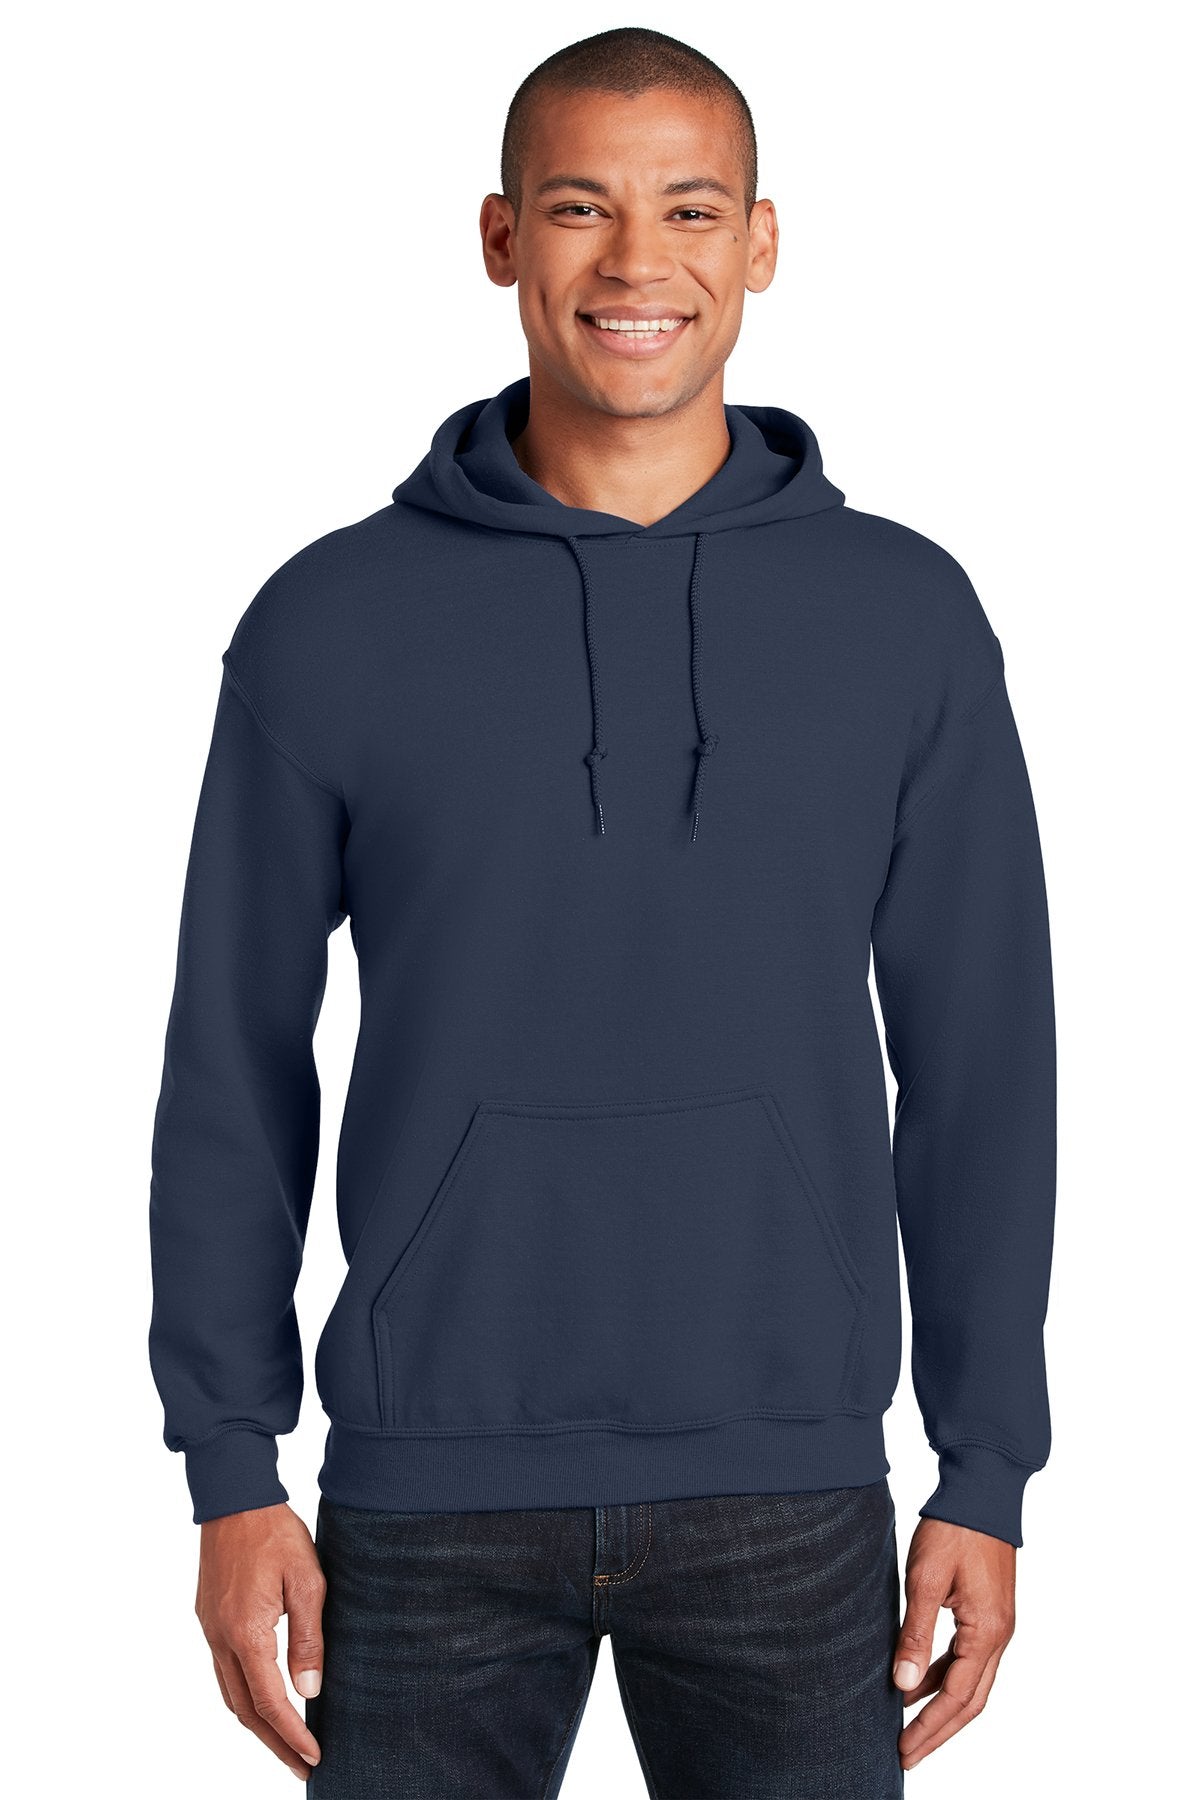 Gildan Navy 18500 custom design sweatshirts